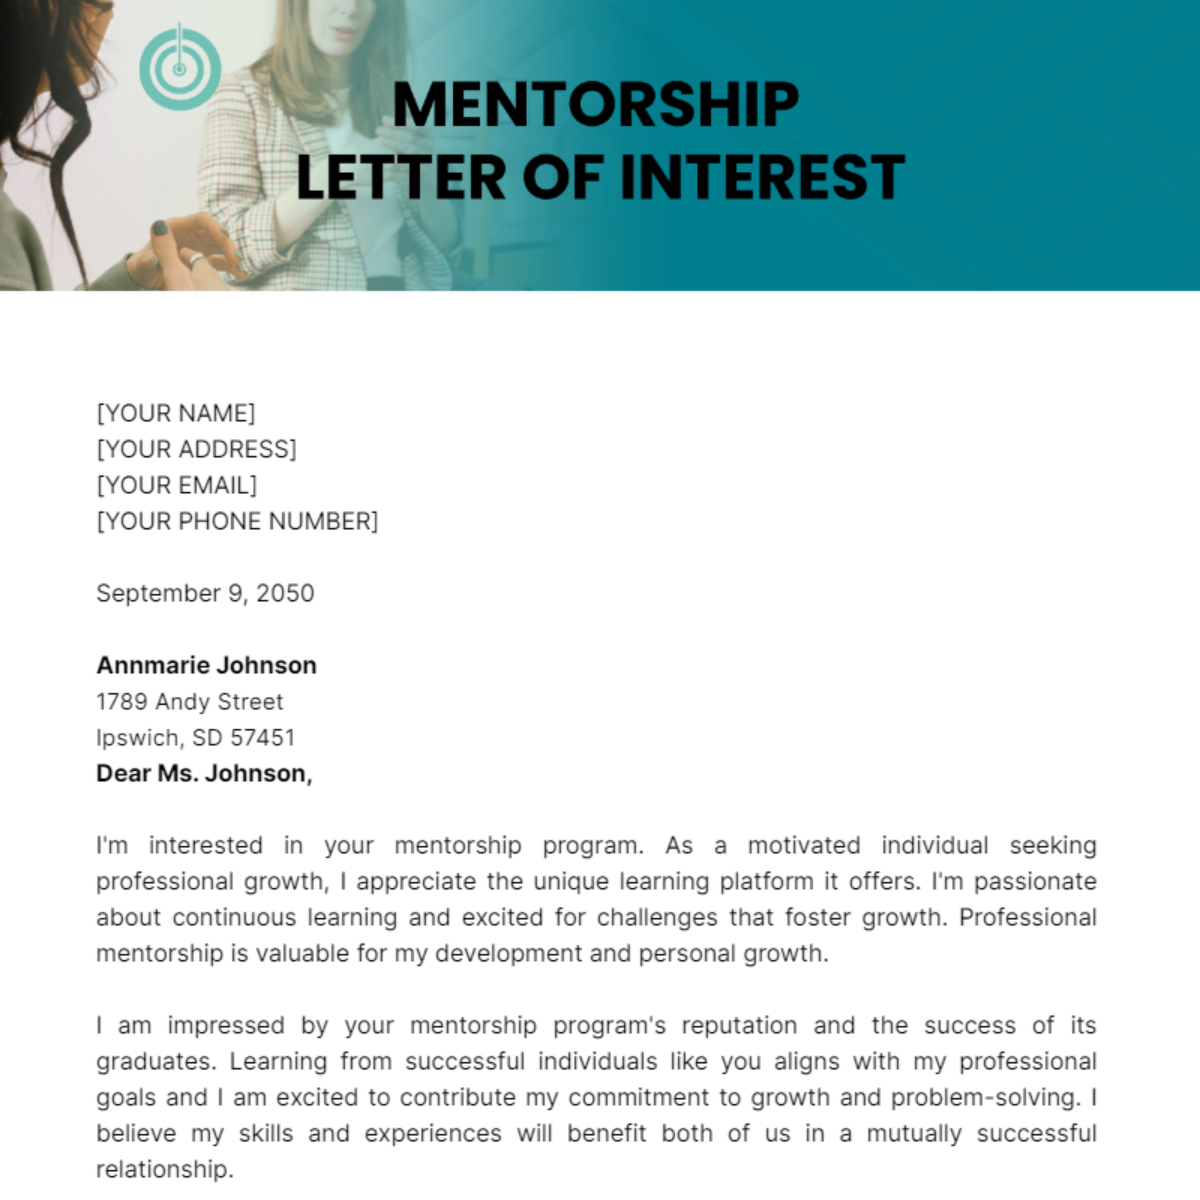 Mentorship Letter of Interest Template